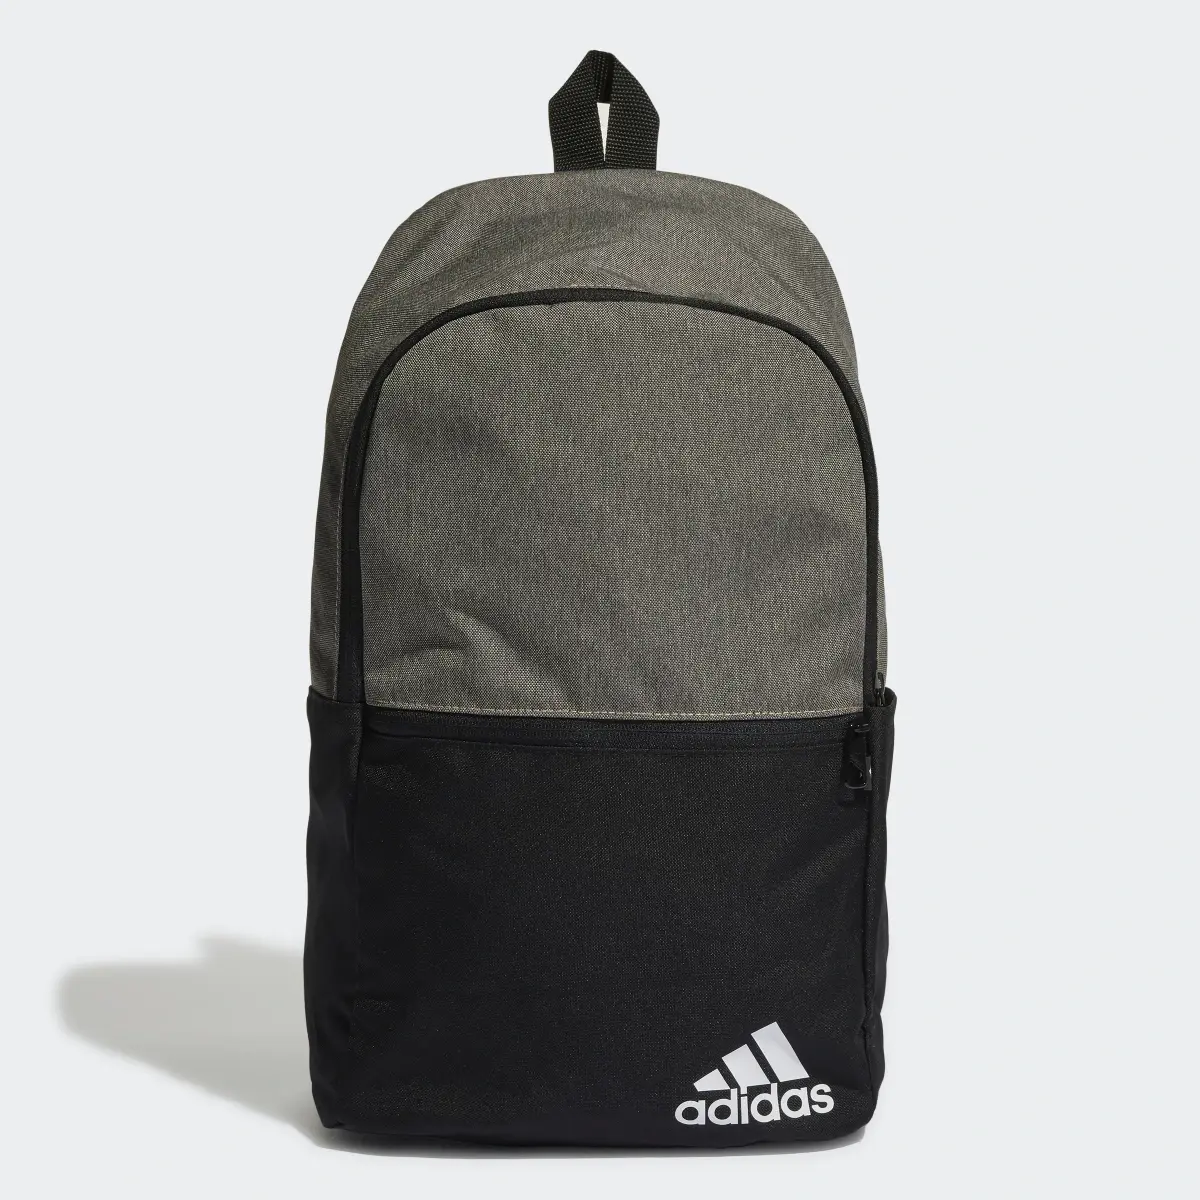 Adidas Daily II Backpack. 1